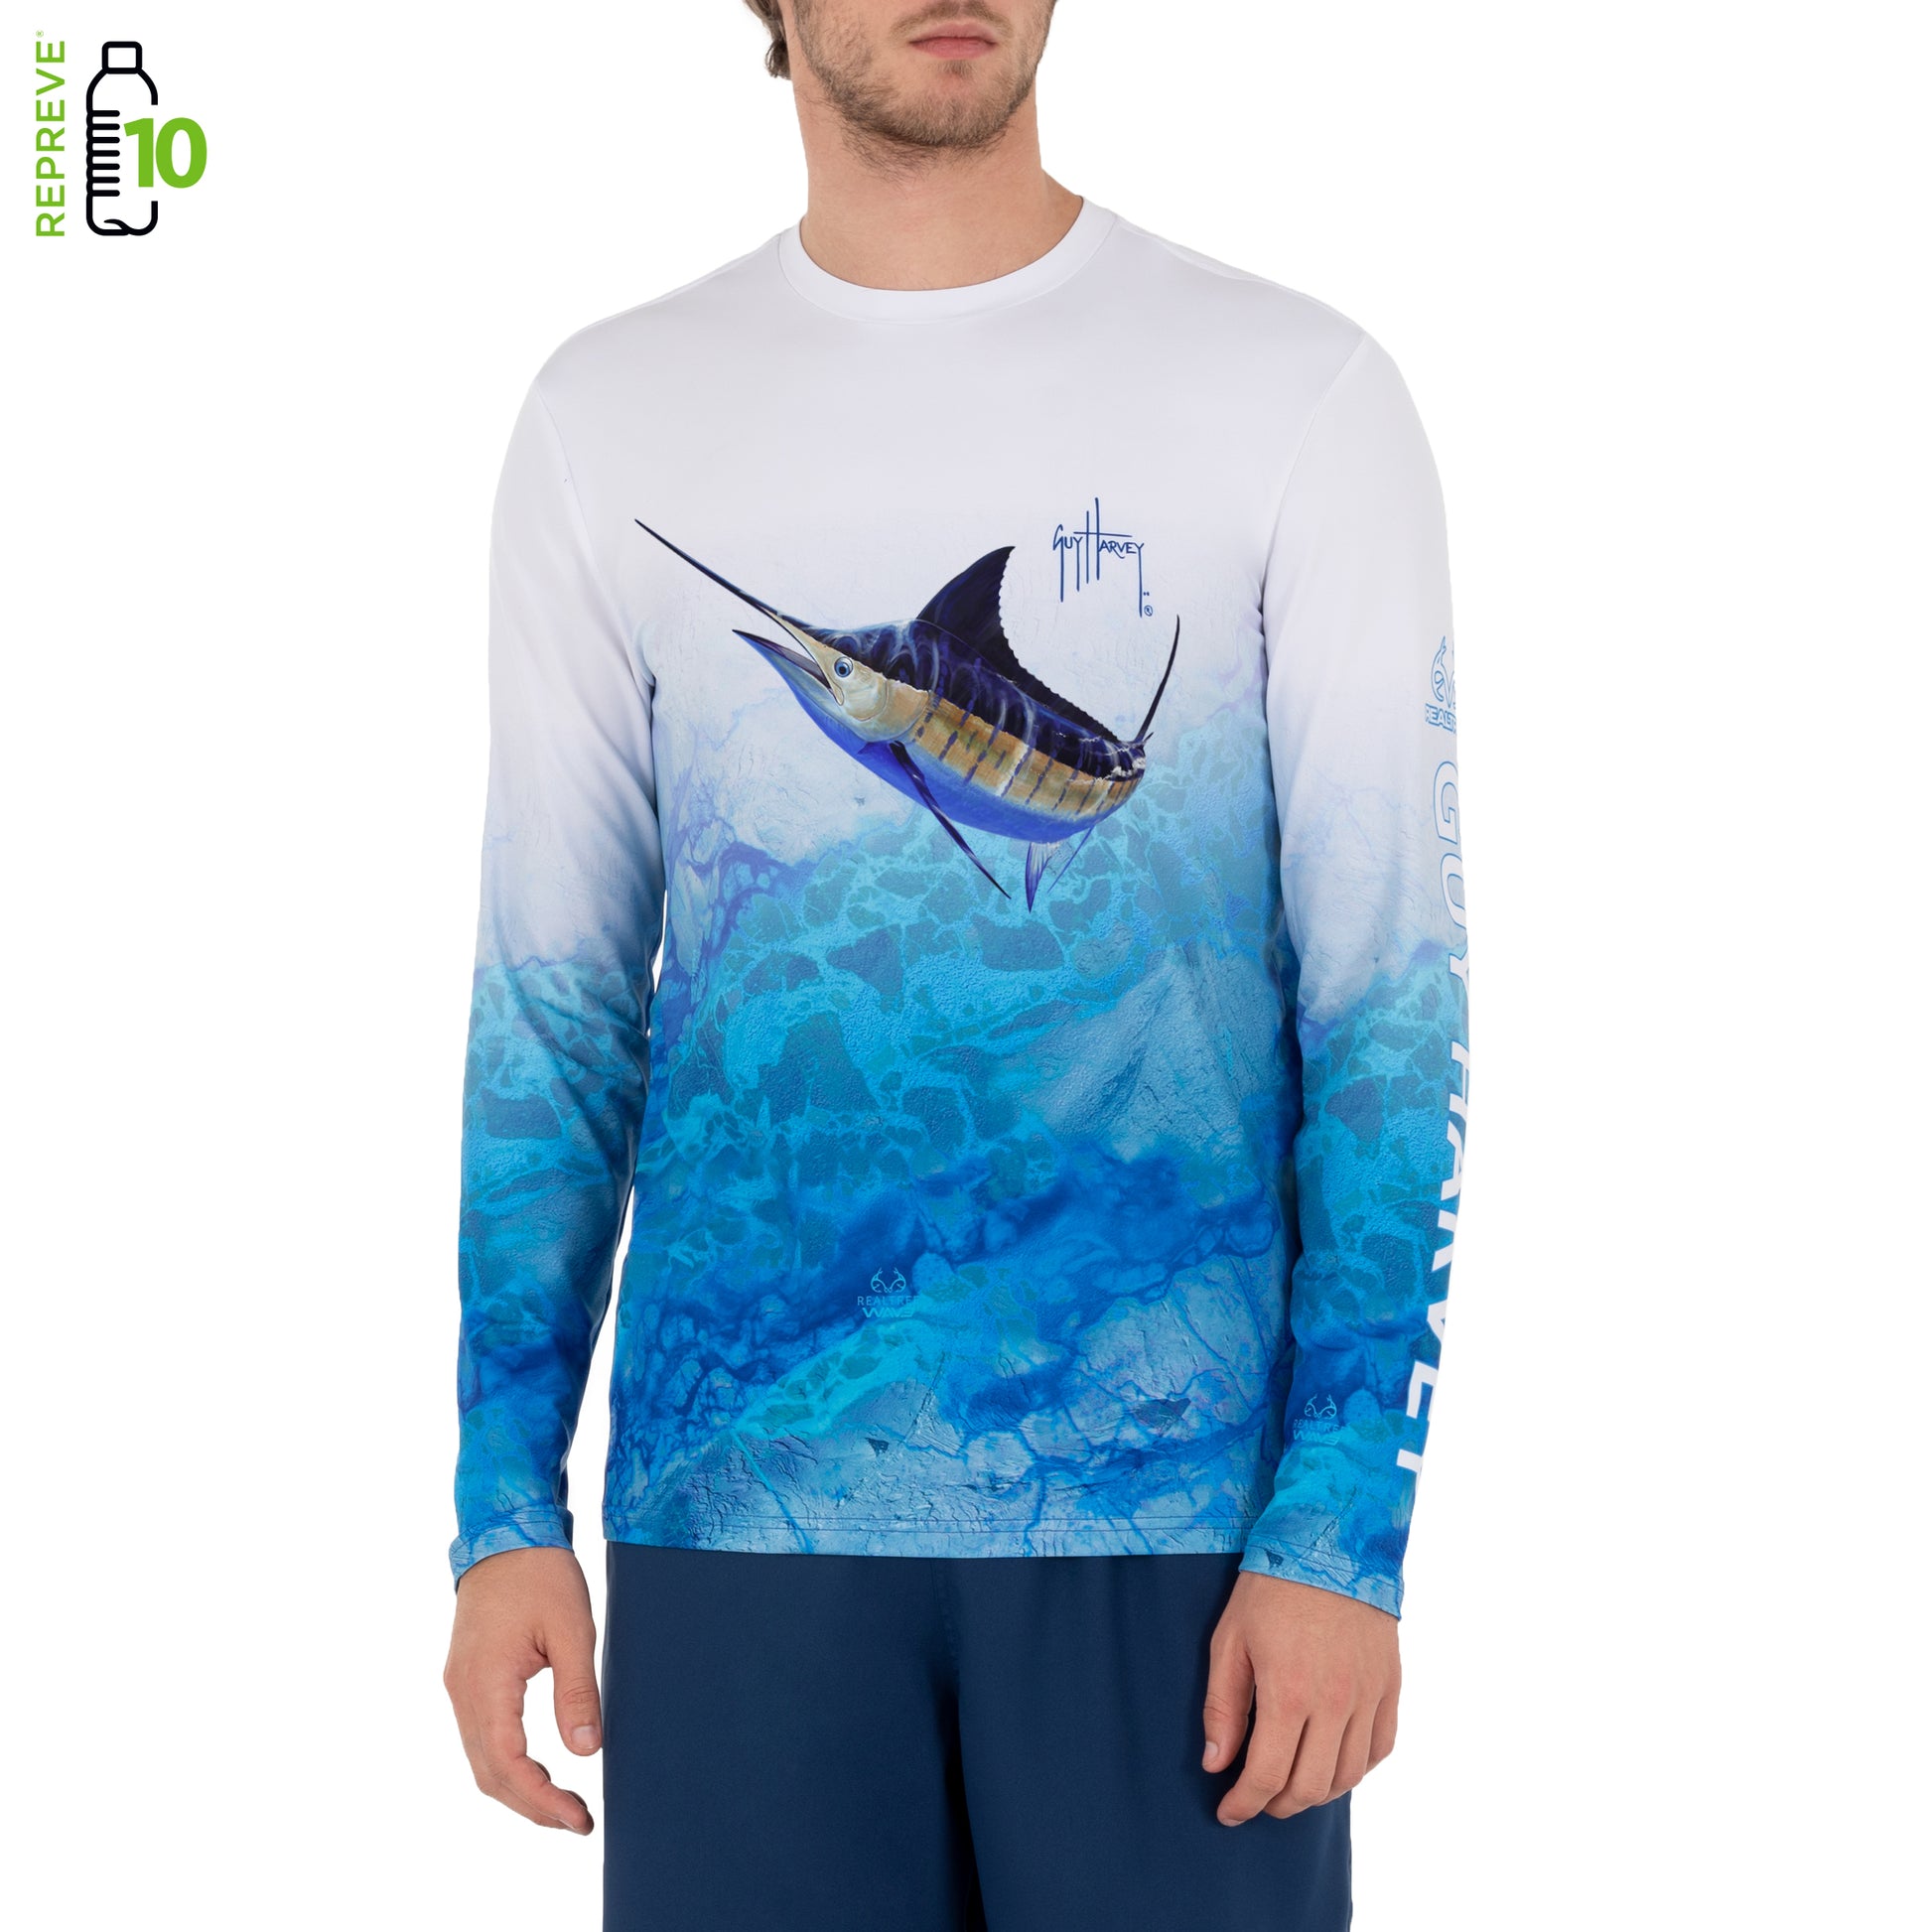 Fishouflage Crappie Camo Fishing Shirt – Riptide Short Sleeve Performance  Shirt for Men (XL) 